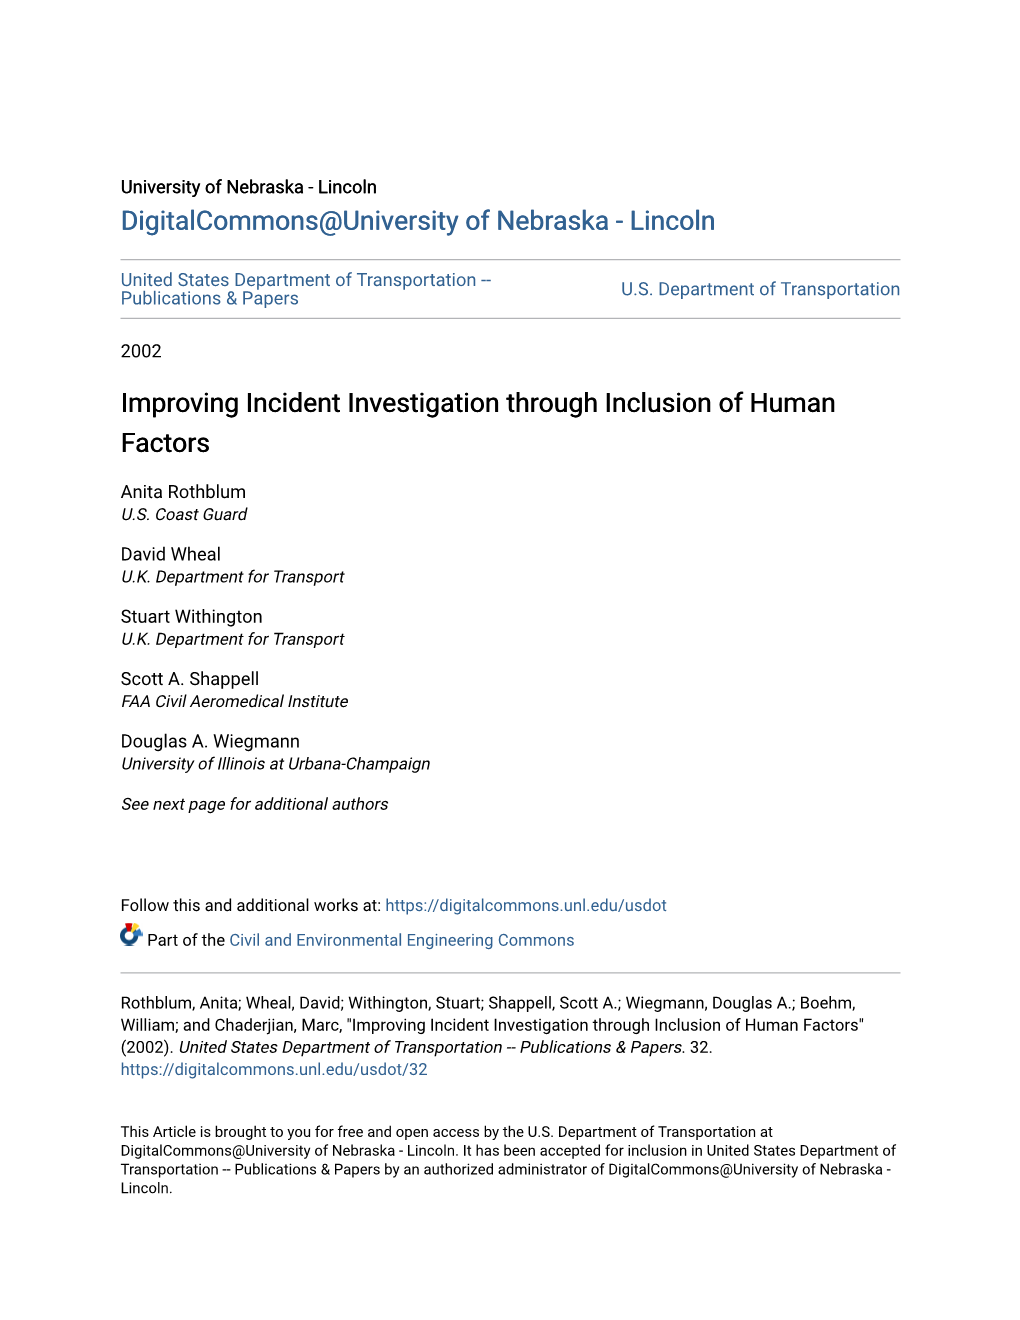 Improving Incident Investigation Through Inclusion of Human Factors